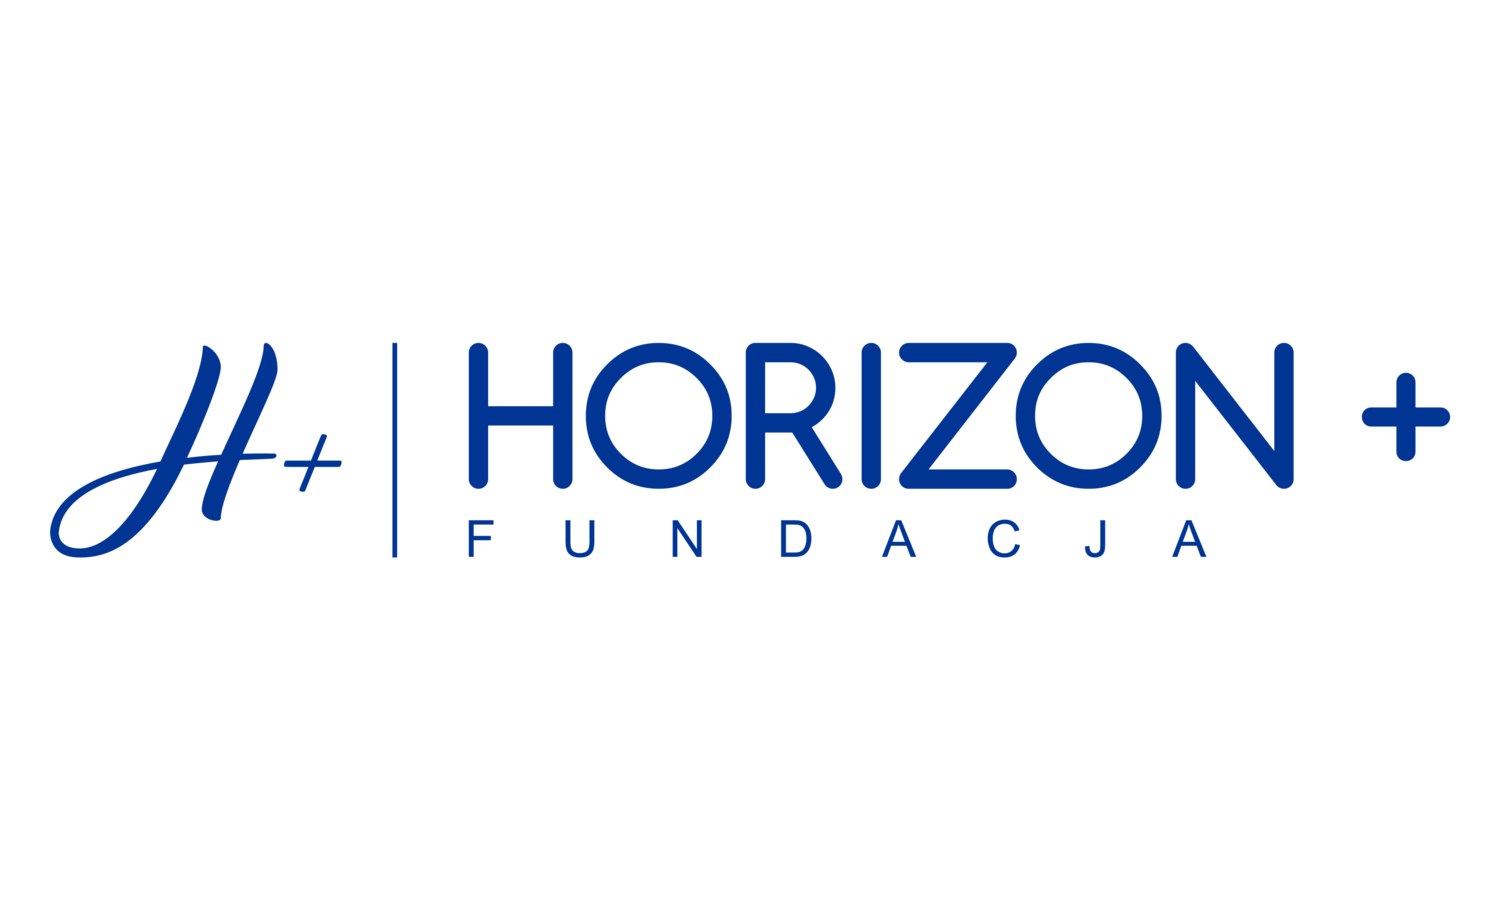 Fundacja Horizon+